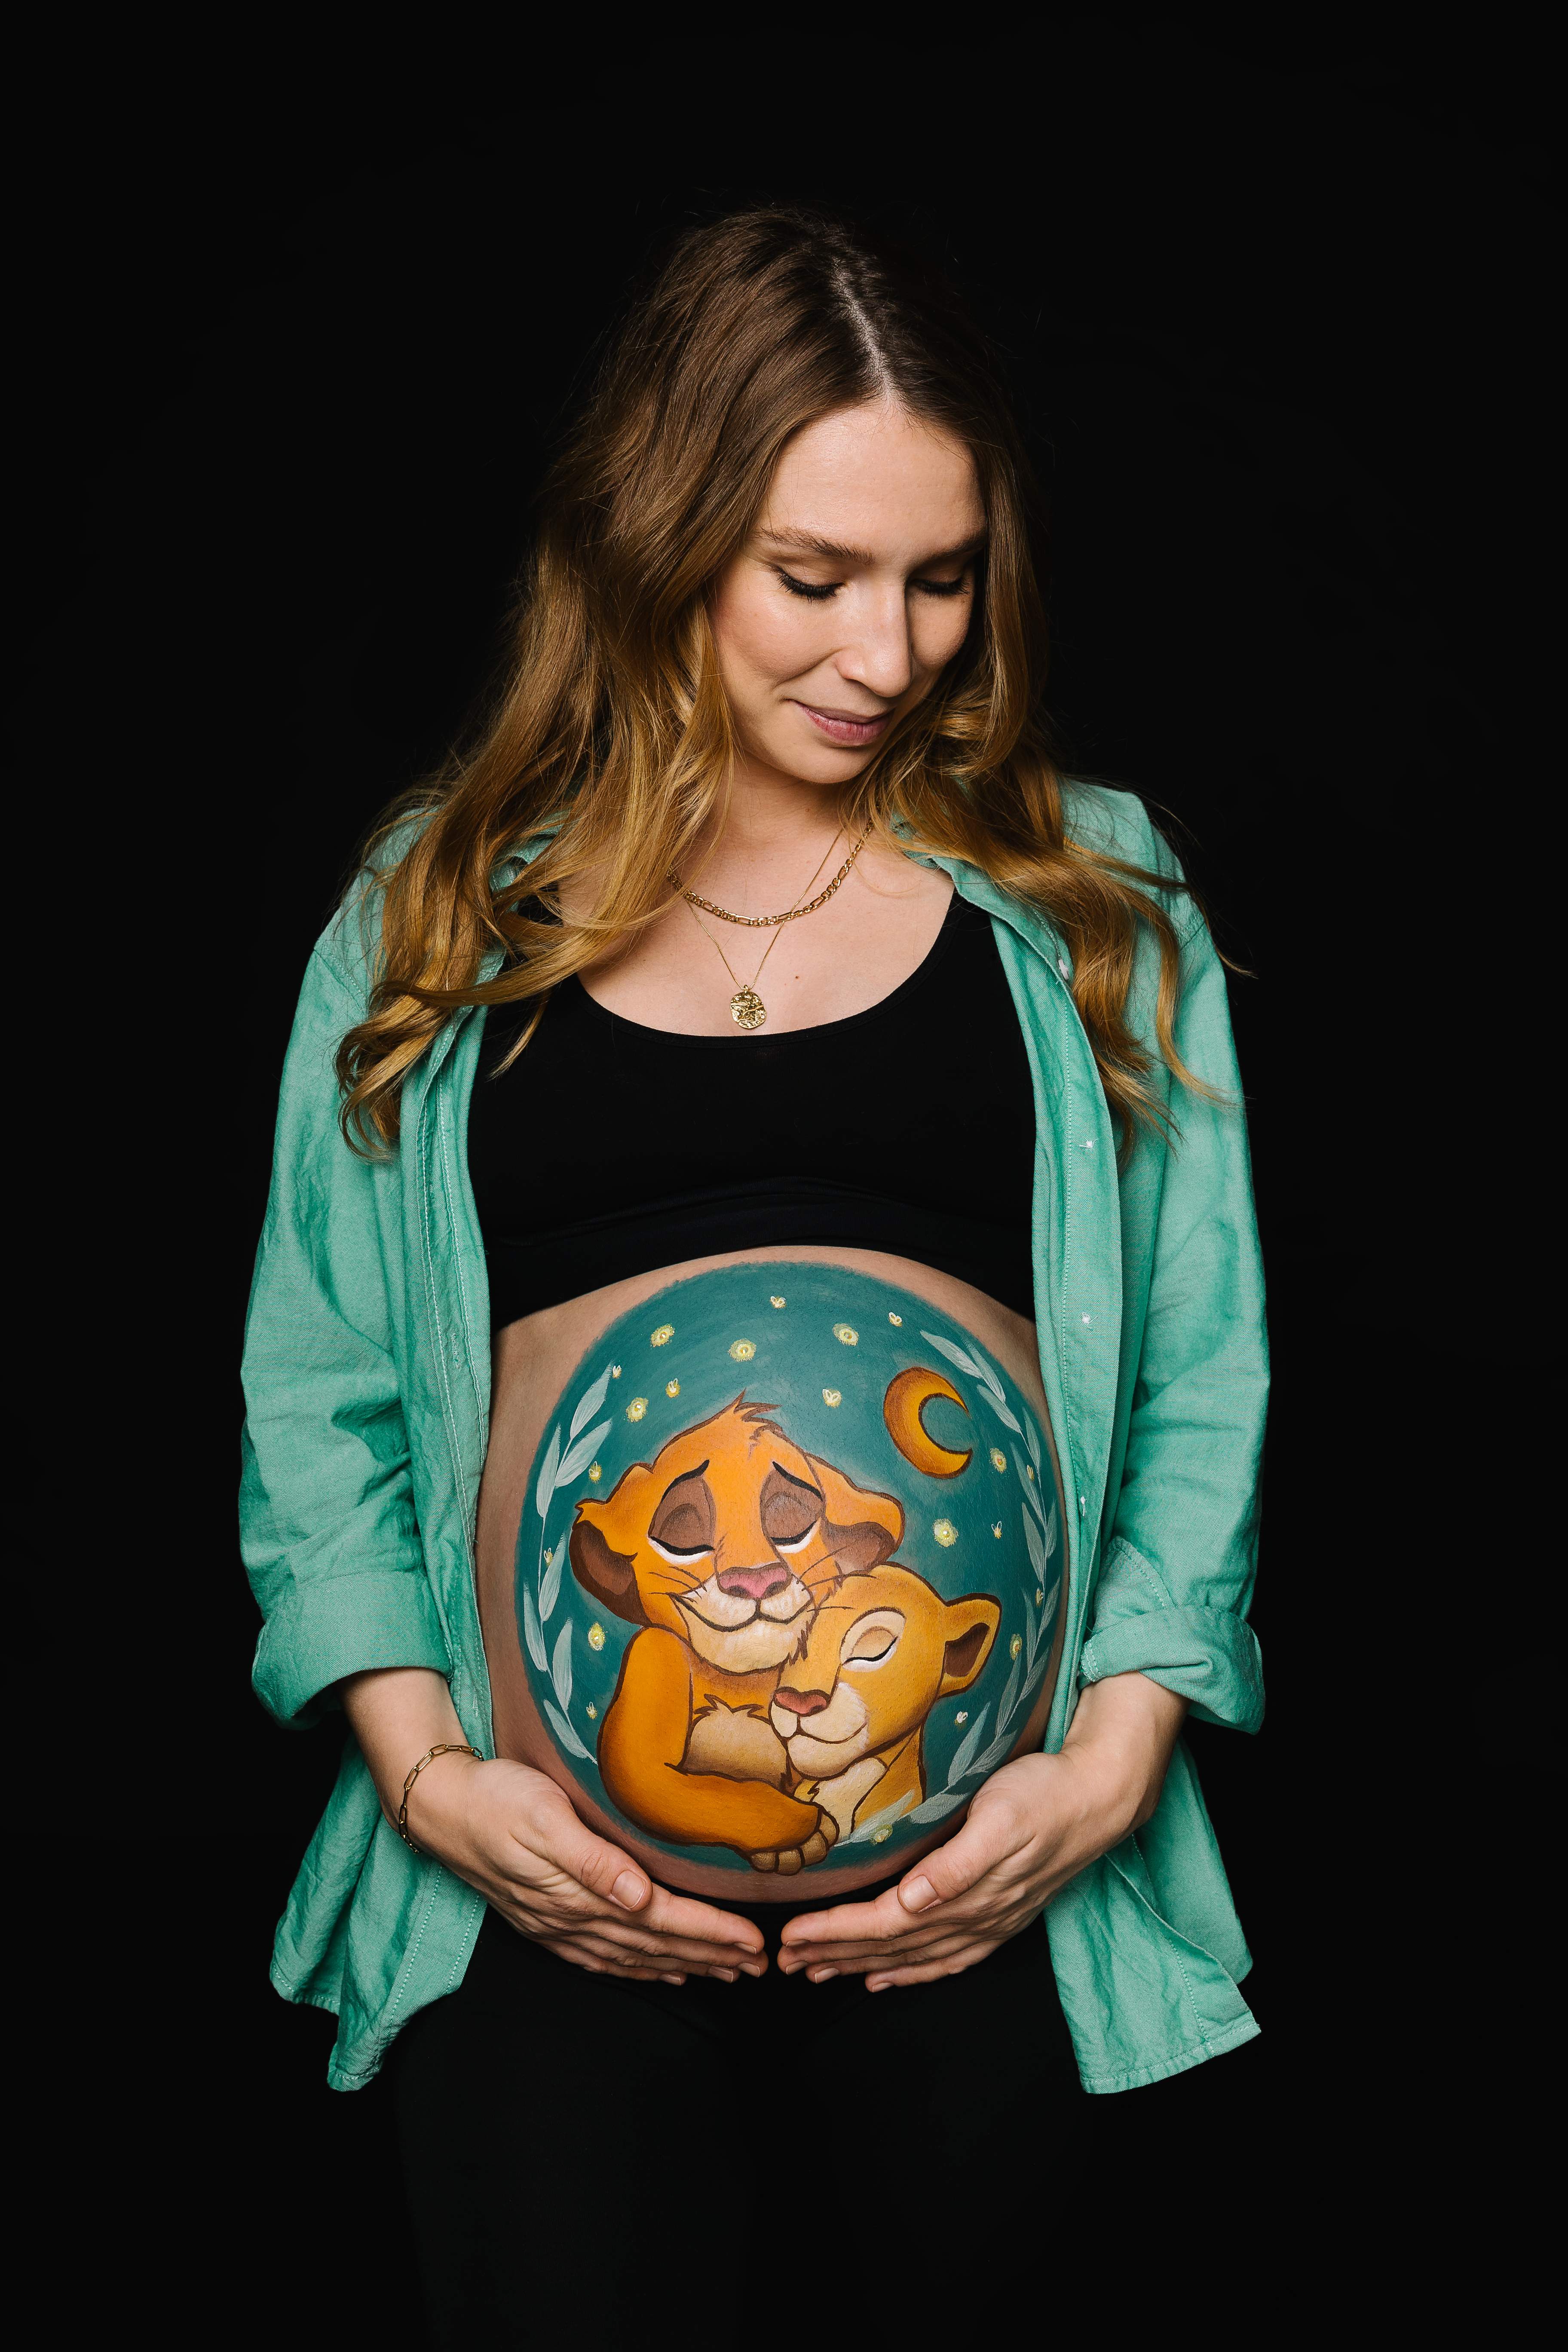 Bellypaint Bellypainting Bodypaint Schwangerschaftsshooting Schwanger Baby Babybauch